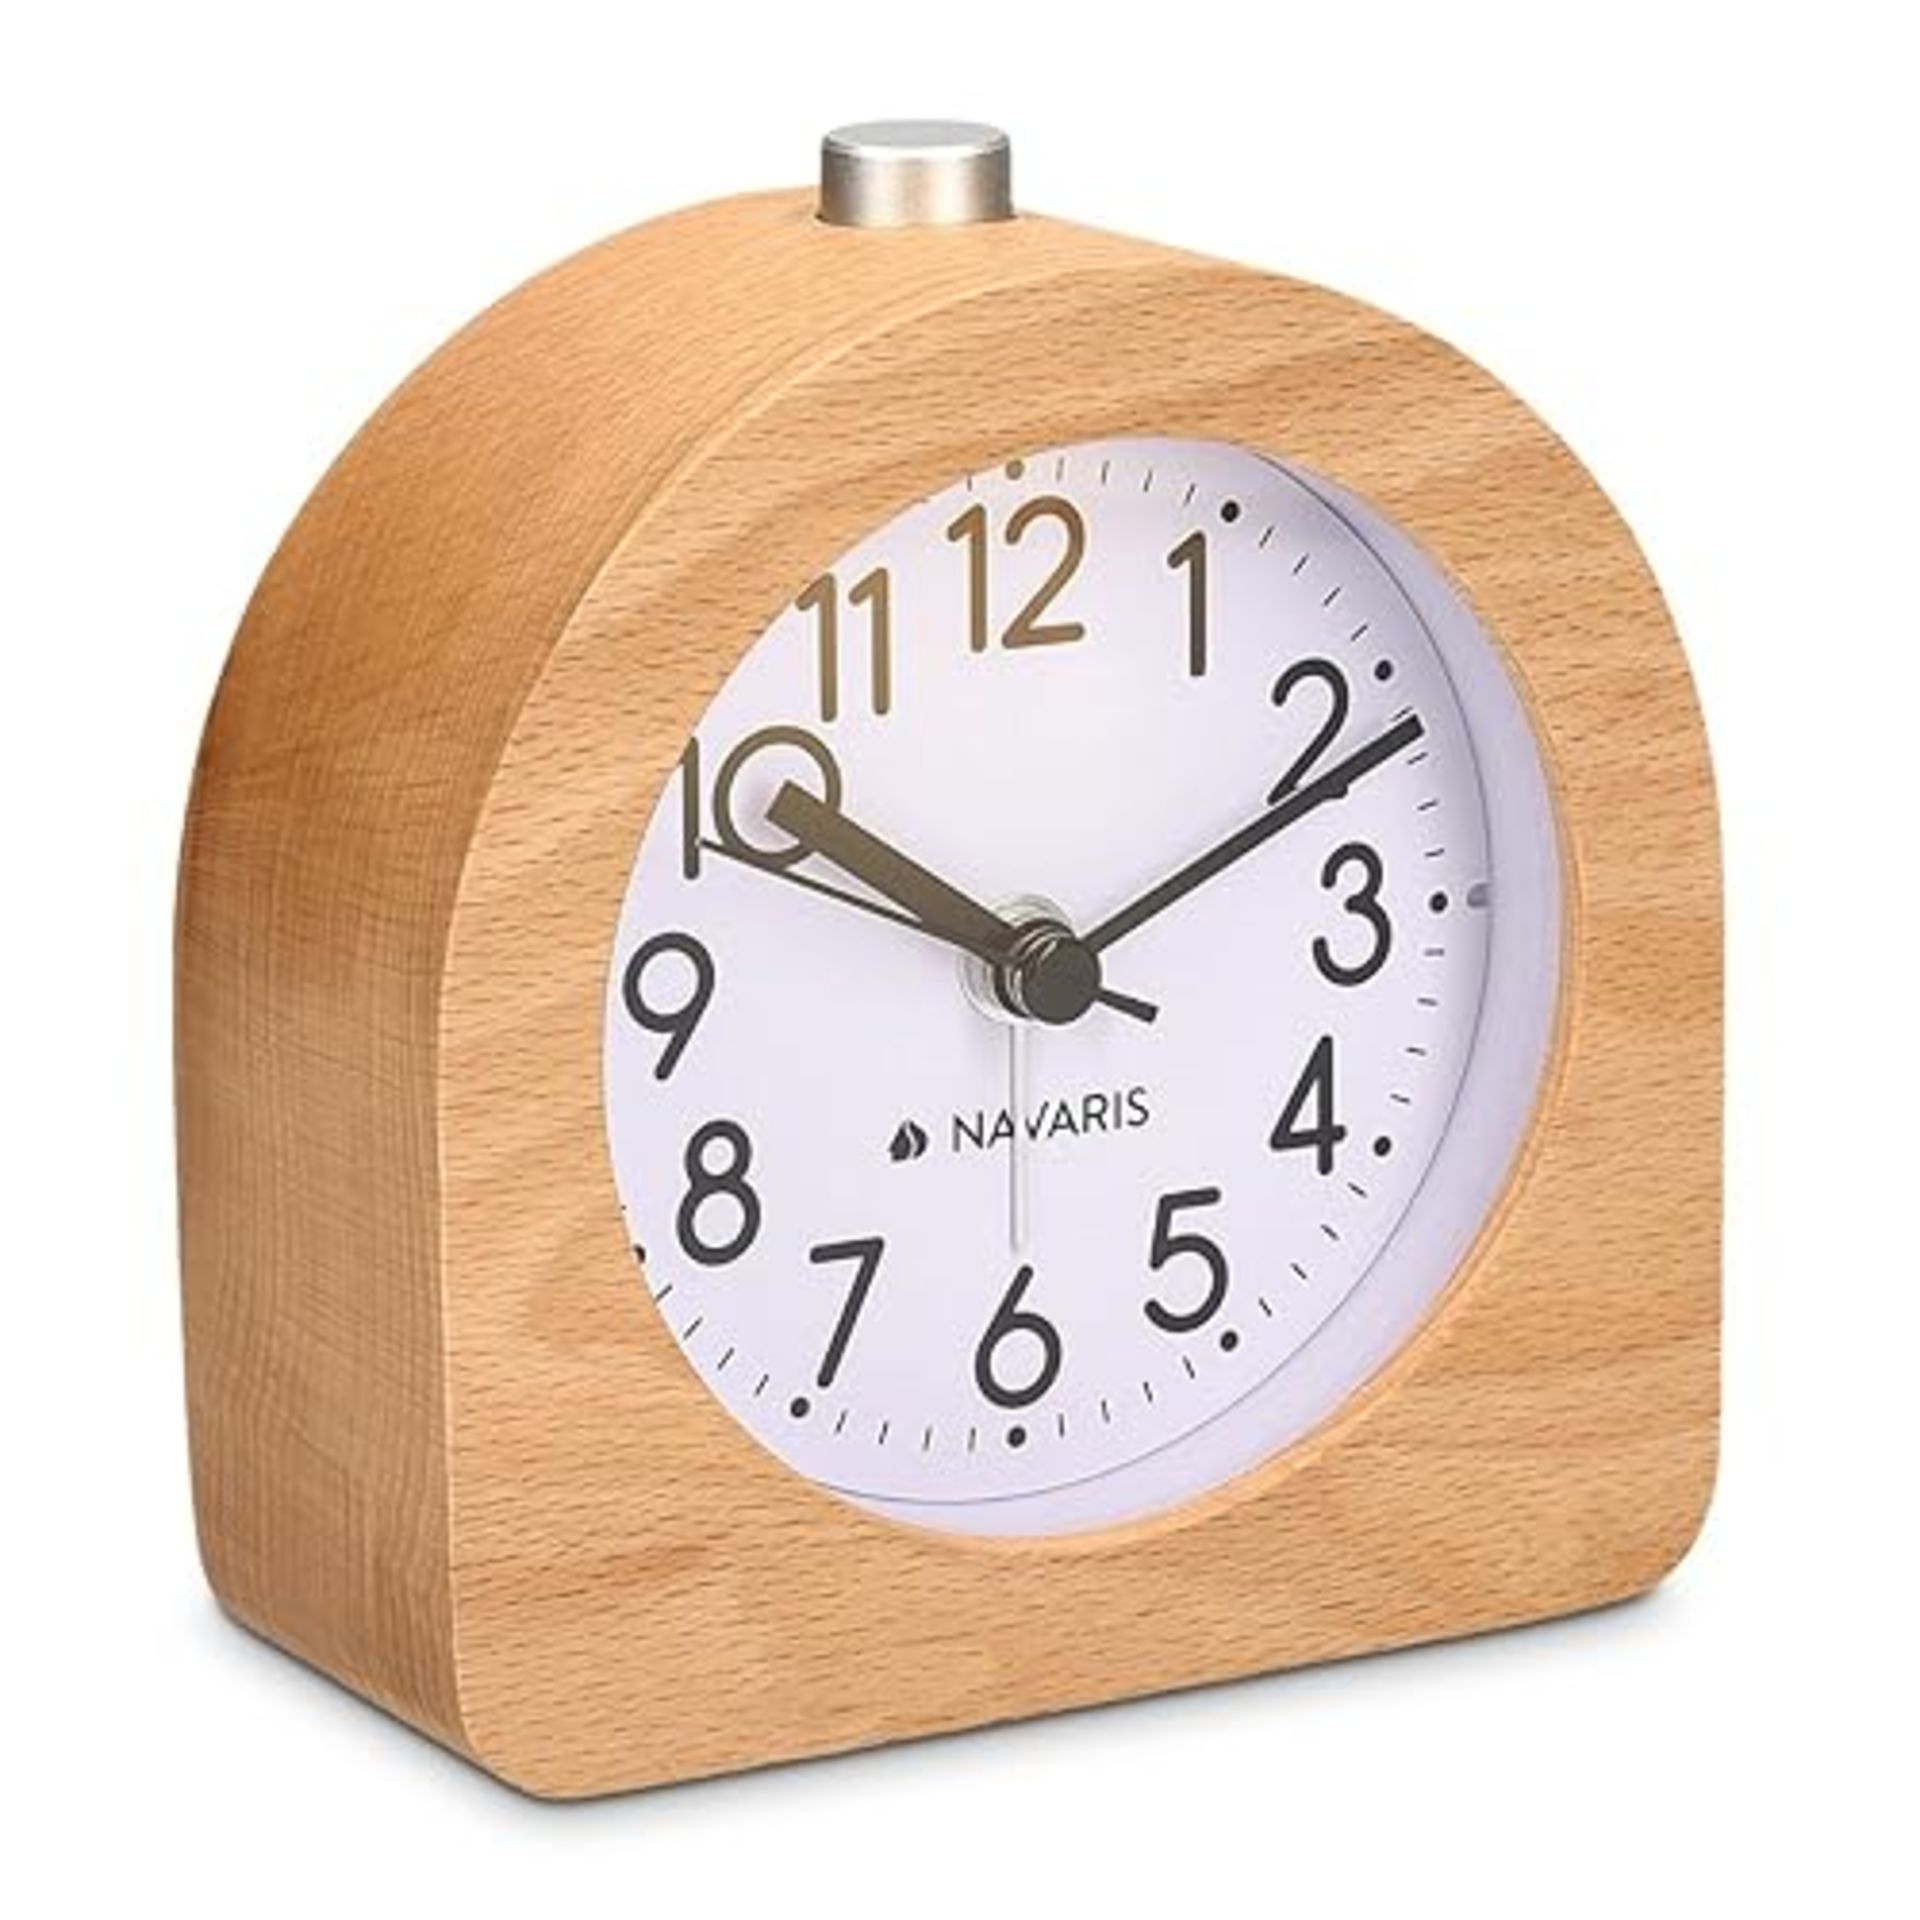 Navaris Wooden Bedside Alarm Clock - Analogue Table Clock w/Retro Design Snooze Function & Light - 